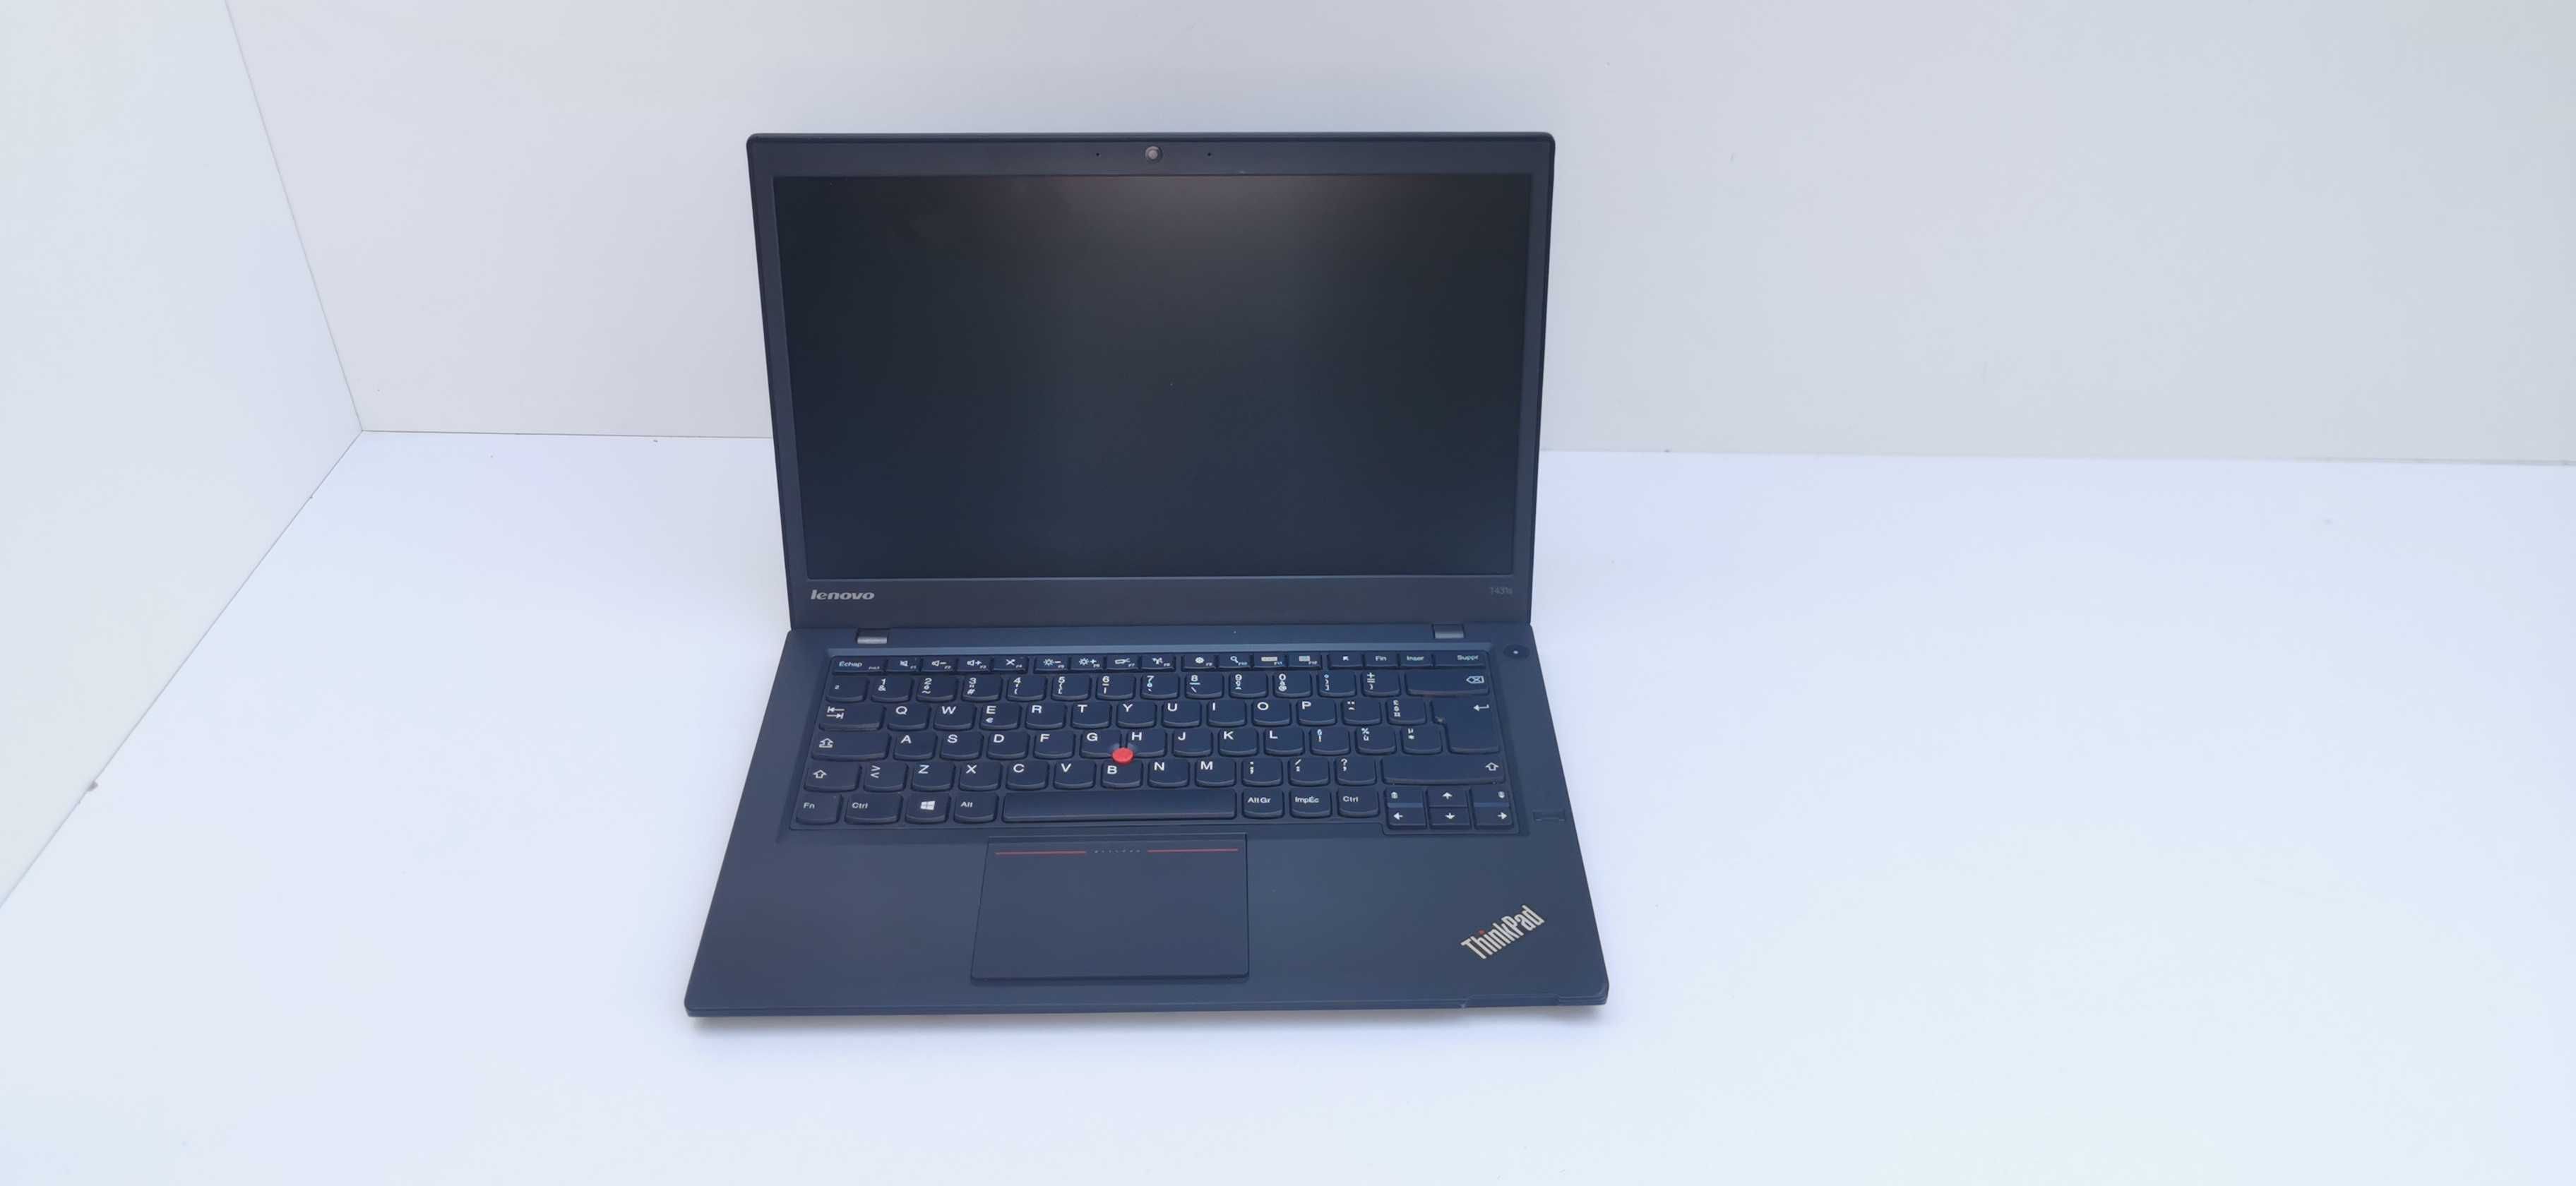 Lenovo ThinkPad T431S i5 128 GB SSD 8 GB RAM DOAR AZI 699 lei